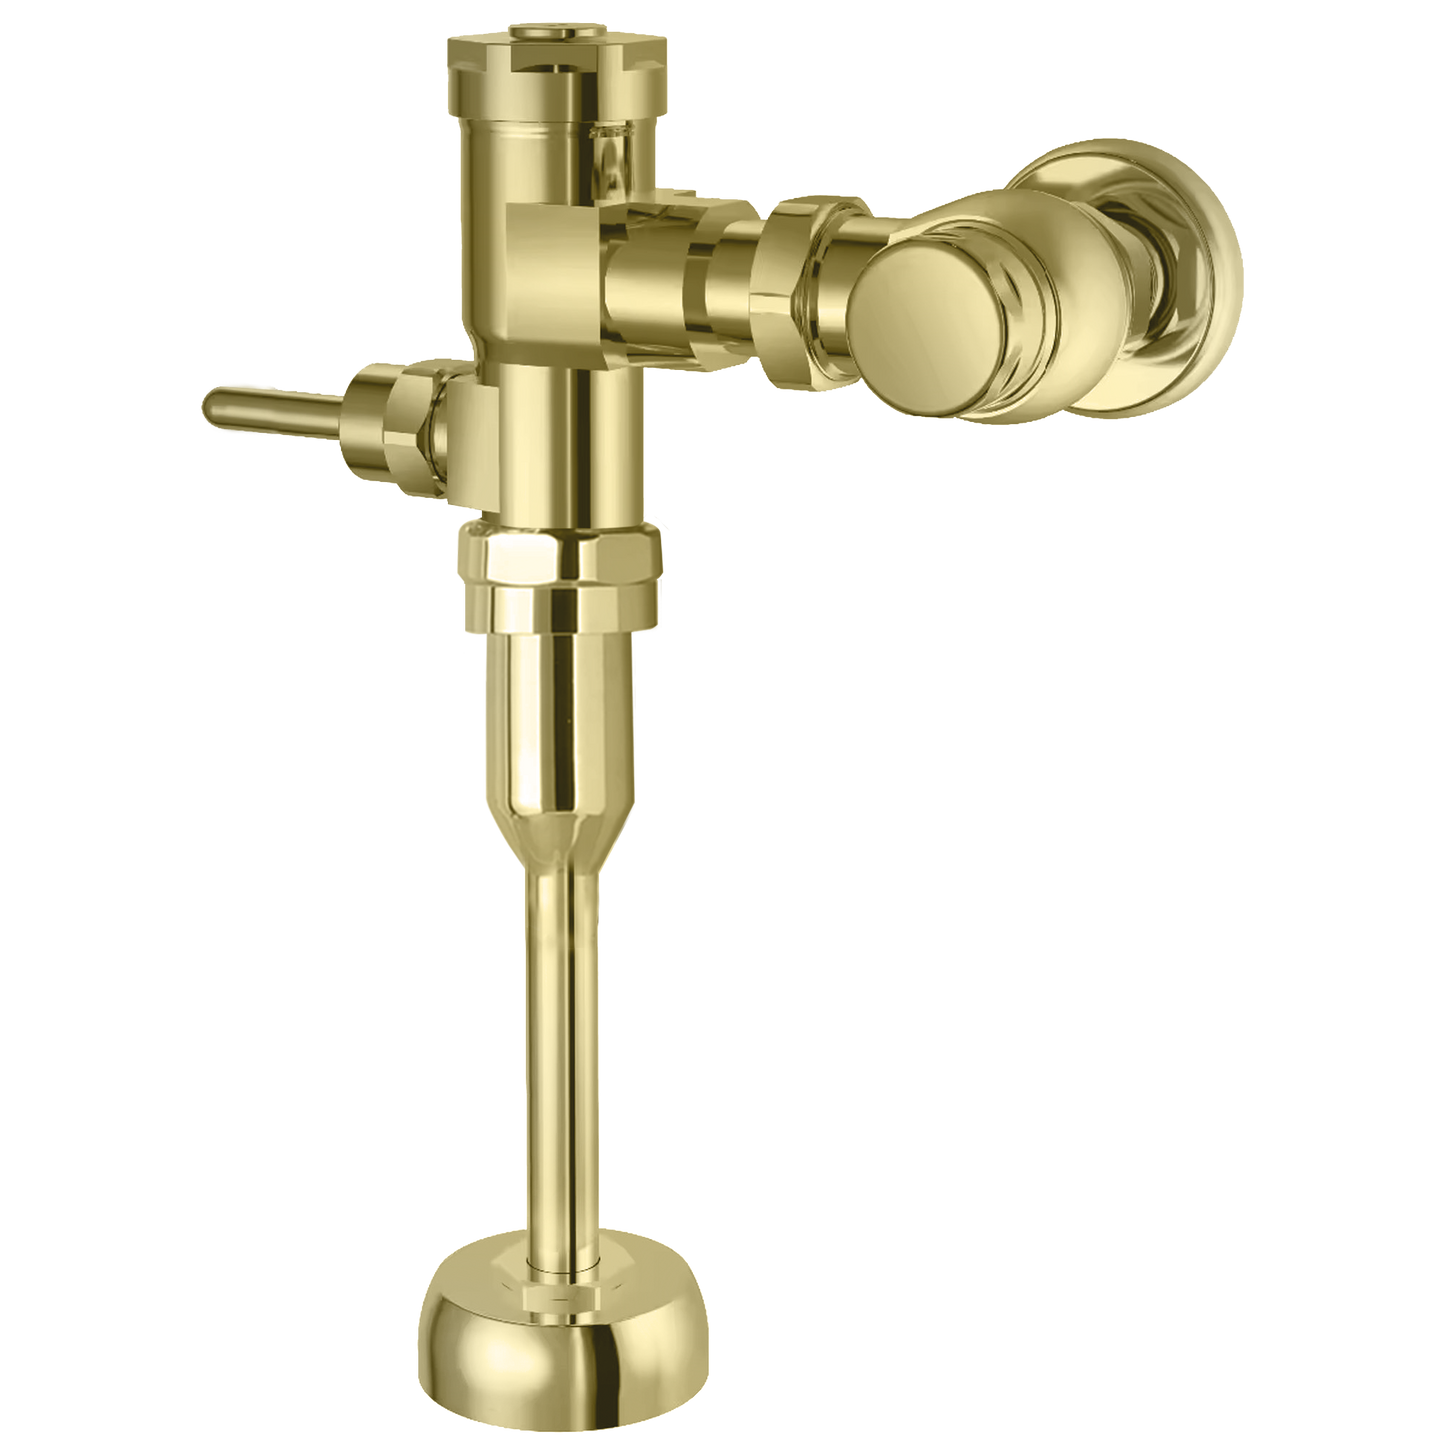 MUV-1 Manual Toilet Flush Valve in Polished Brass